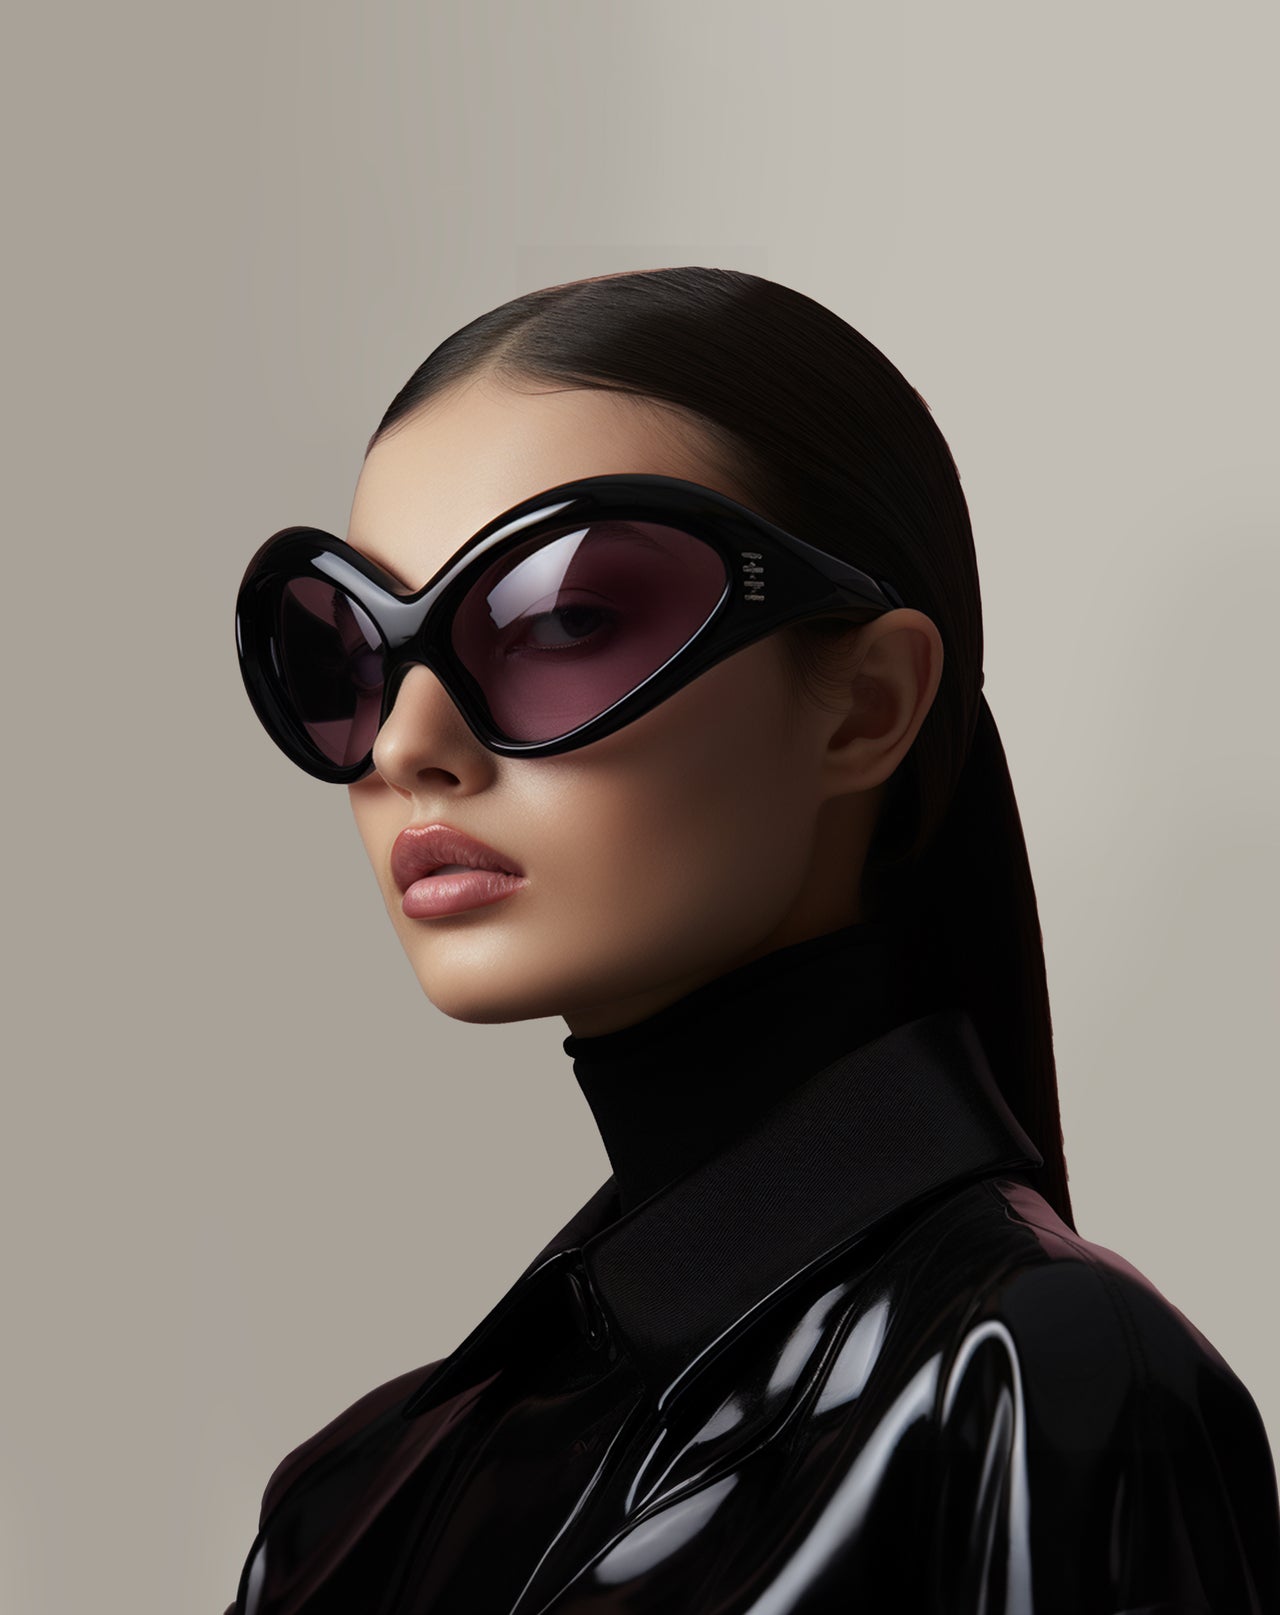 Quorra Cateye Sunglasses - Black